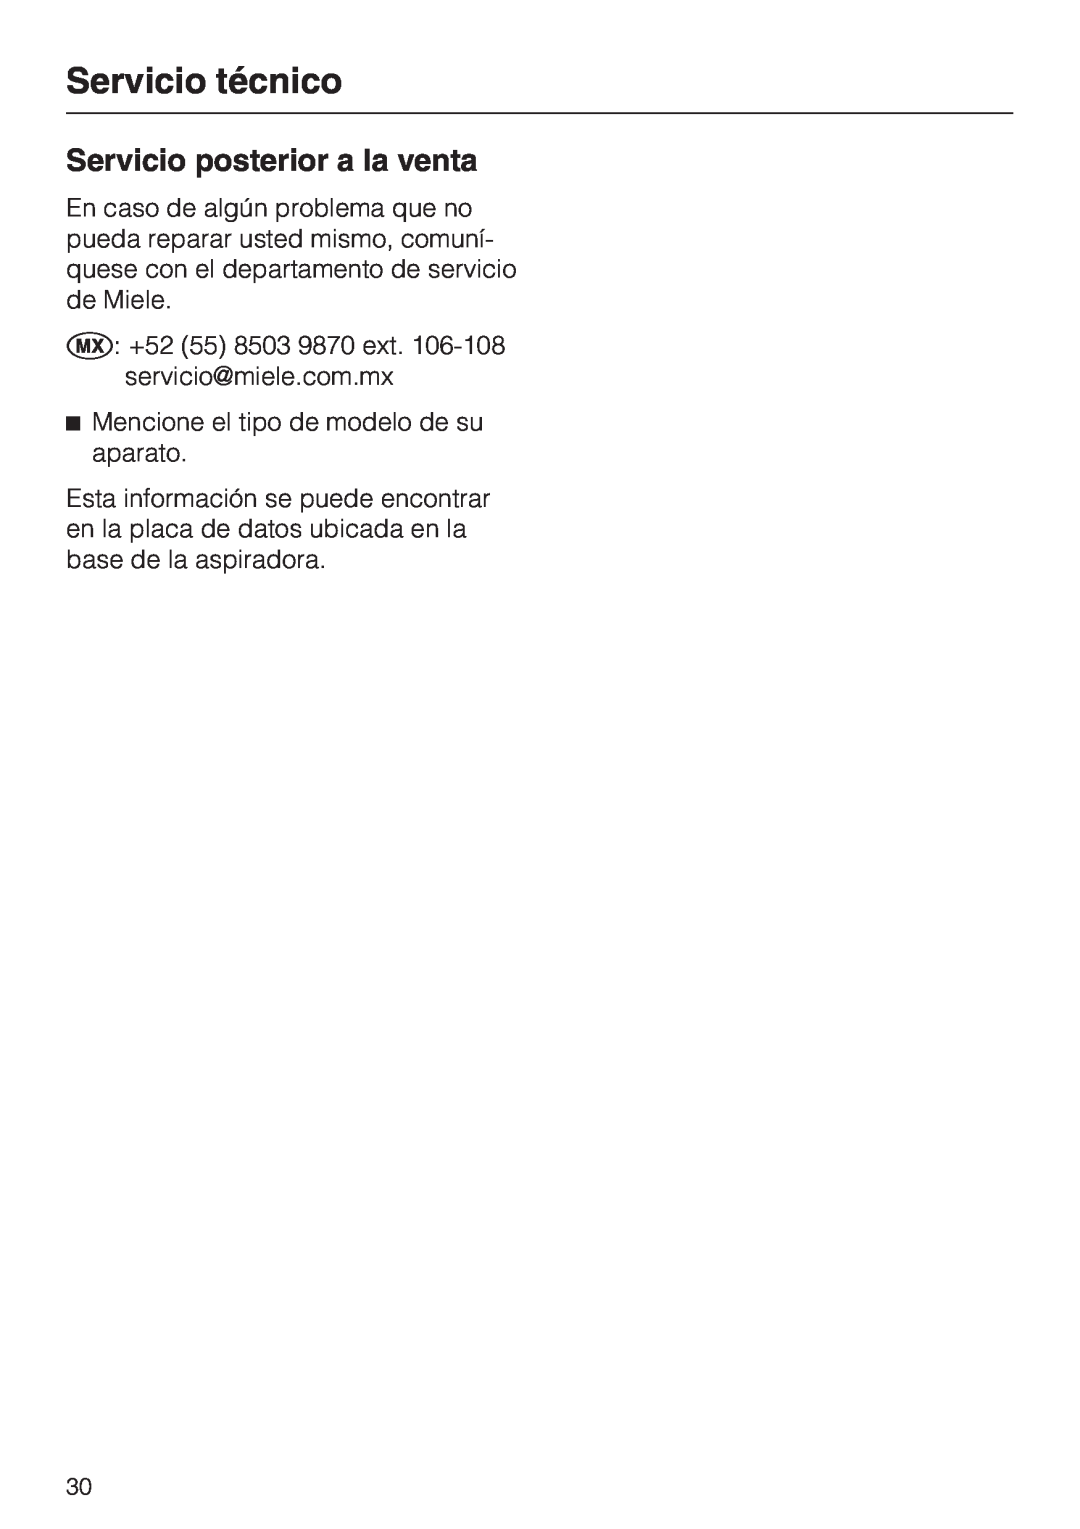 Miele S 2000 operating instructions Servicio técnico, Servicio posterior a la venta 